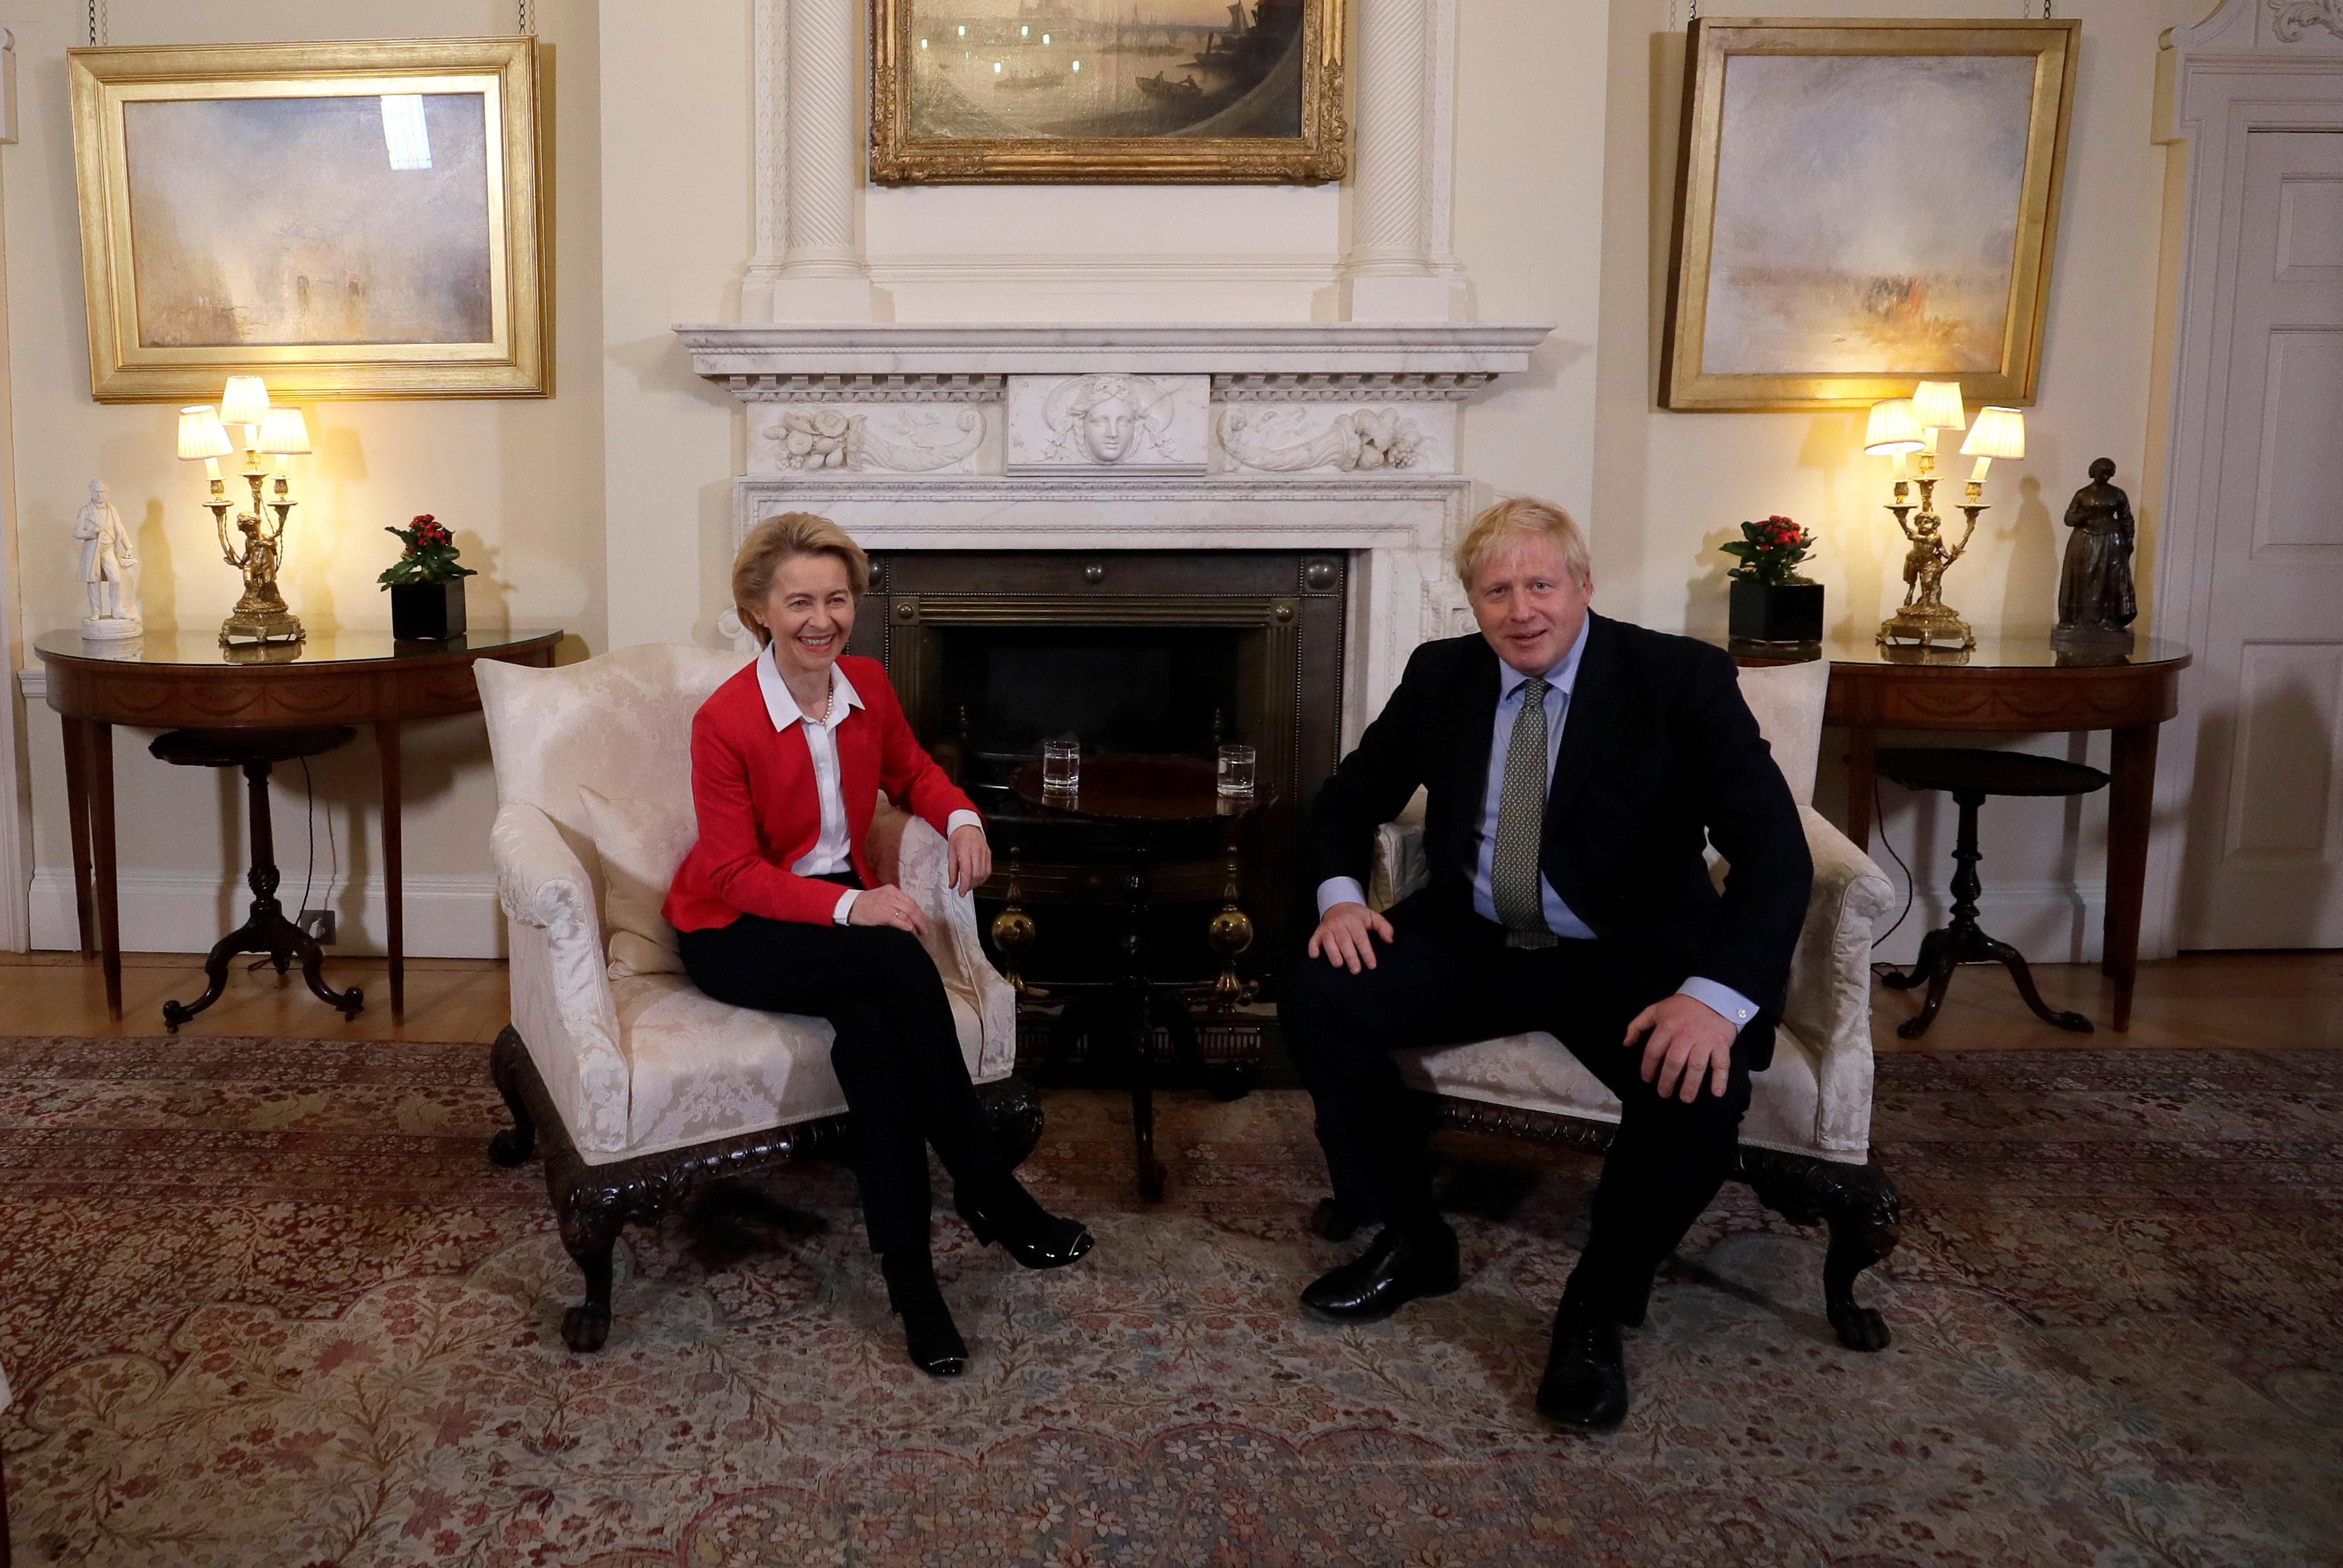 Britain's Prime Minister Boris Johnson meets with European Commission President Ursula von der Leyen inside 10 Downing Street in London